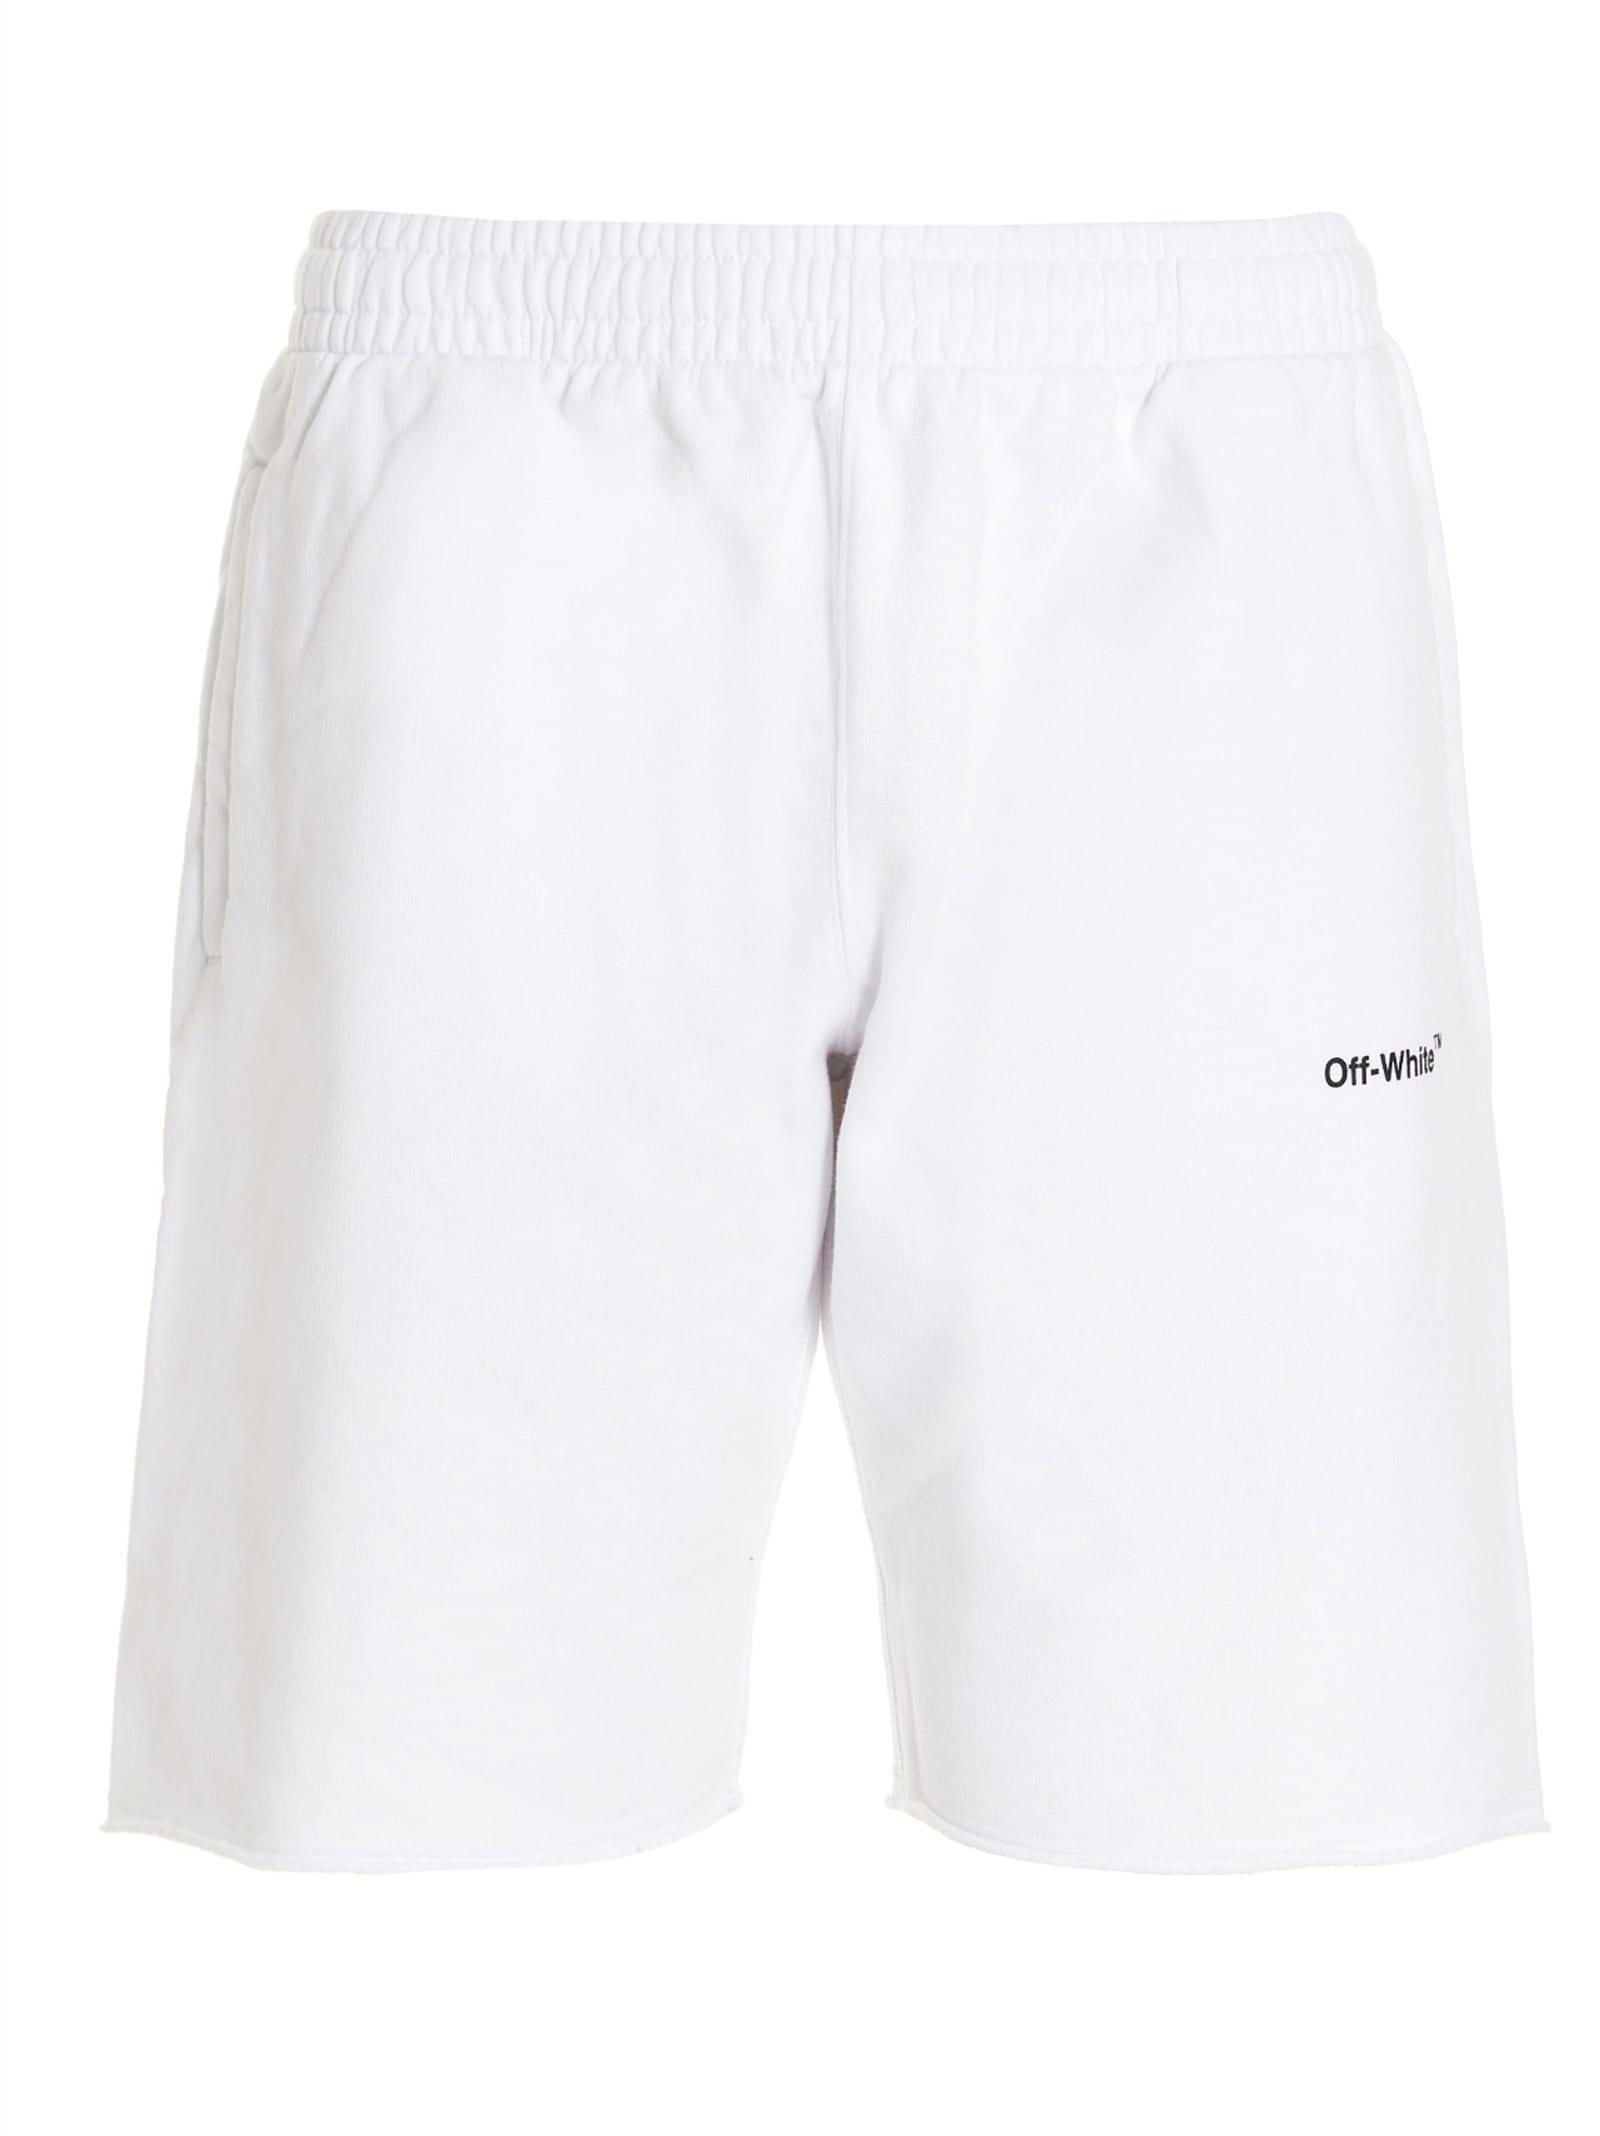 Off-White c/o Virgil Abloh caravaggio Bermuda Shorts in White for Men | Lyst